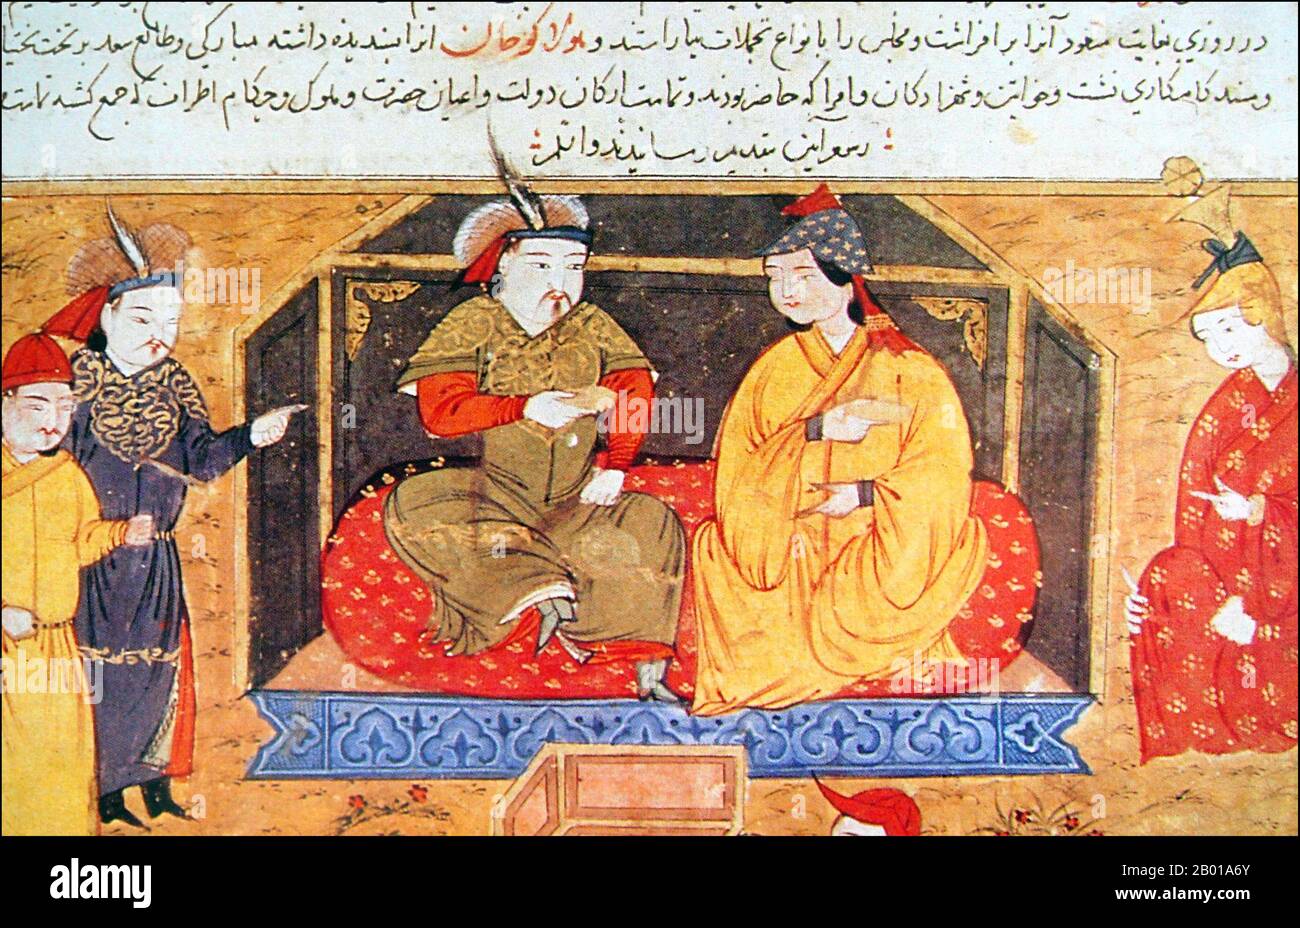 Iran/Mongolia: Hulagu Khan (c. 1217 - 8 February 1265) with his Nestorian Christian wife Dokuz Khatun, from Rashid-al-Din Hamadani (1237-1318), 'History of the World', 14th century.  Hulagu Khan, also known as Hülegü, Hulegu or Halaku, was a Mongol ruler who conquered much of Southwest Asia. Son of Tolui and the Kerait princess Sorghaghtani Beki, he was a grandson of Genghis Khan, and the brother of Arik Boke, Möngke Khan and Kublai Khan. Hulagu's army greatly expanded the southwestern portion of the Mongol Empire, founding the Ilkhanate of Persia, a precursor to the eventual Safavid dynasty. Stock Photo